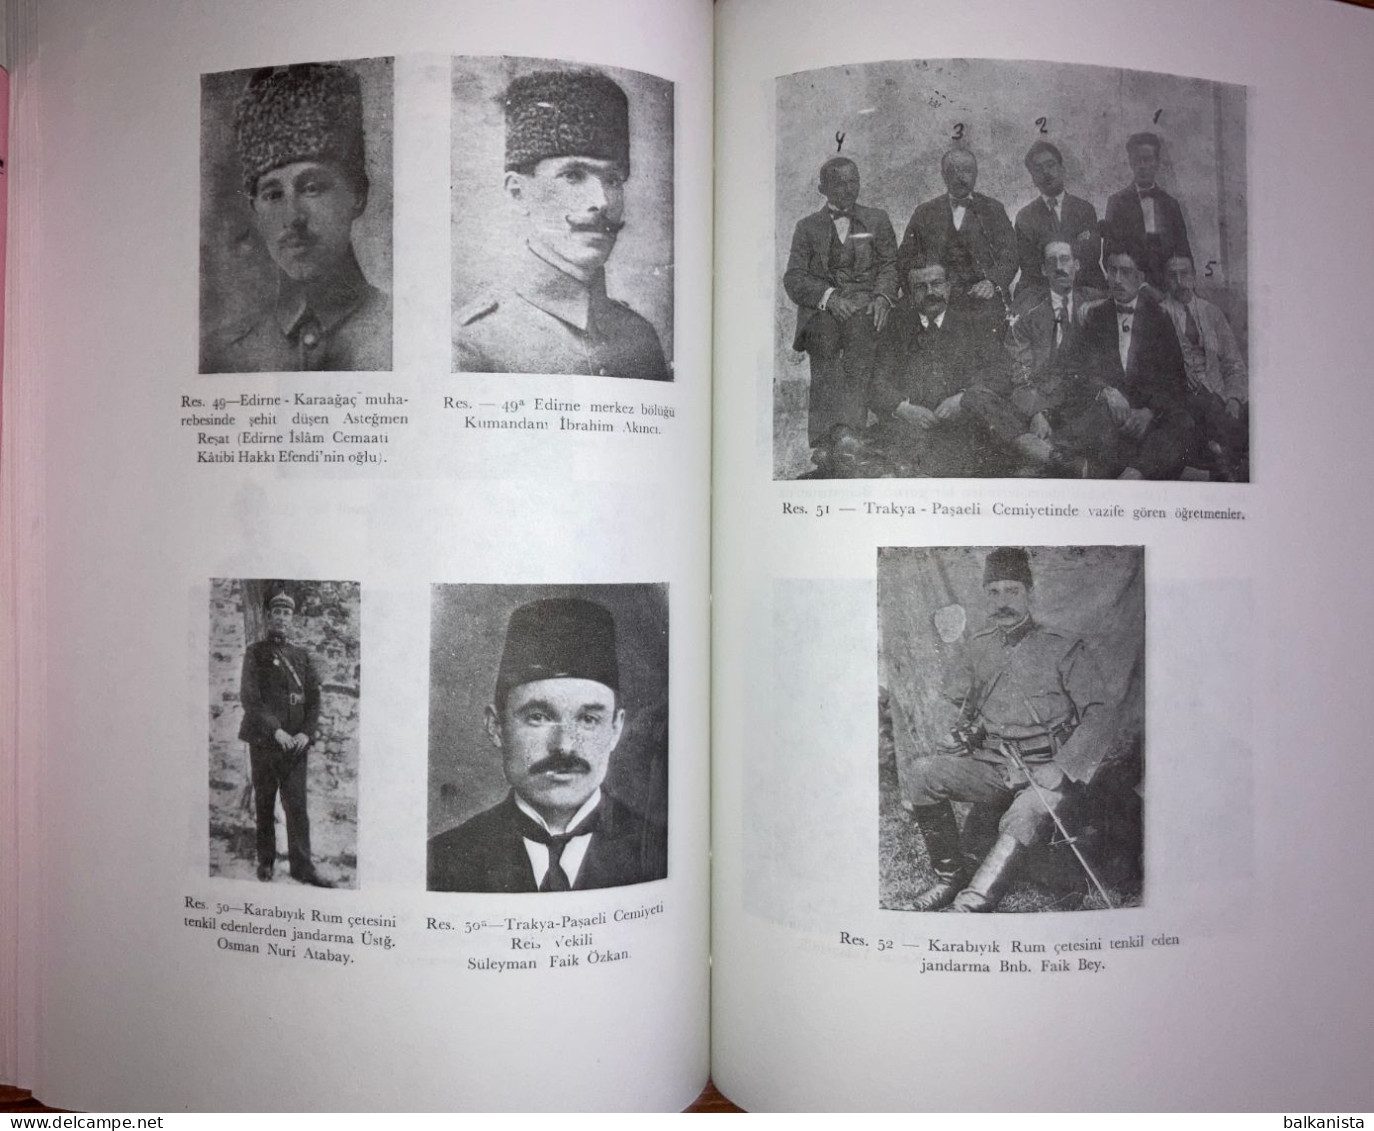 Trakya'da Milli Mucadele Tevfik Bıyıklioglu Ottoman Turkish History Thrace - Nahost